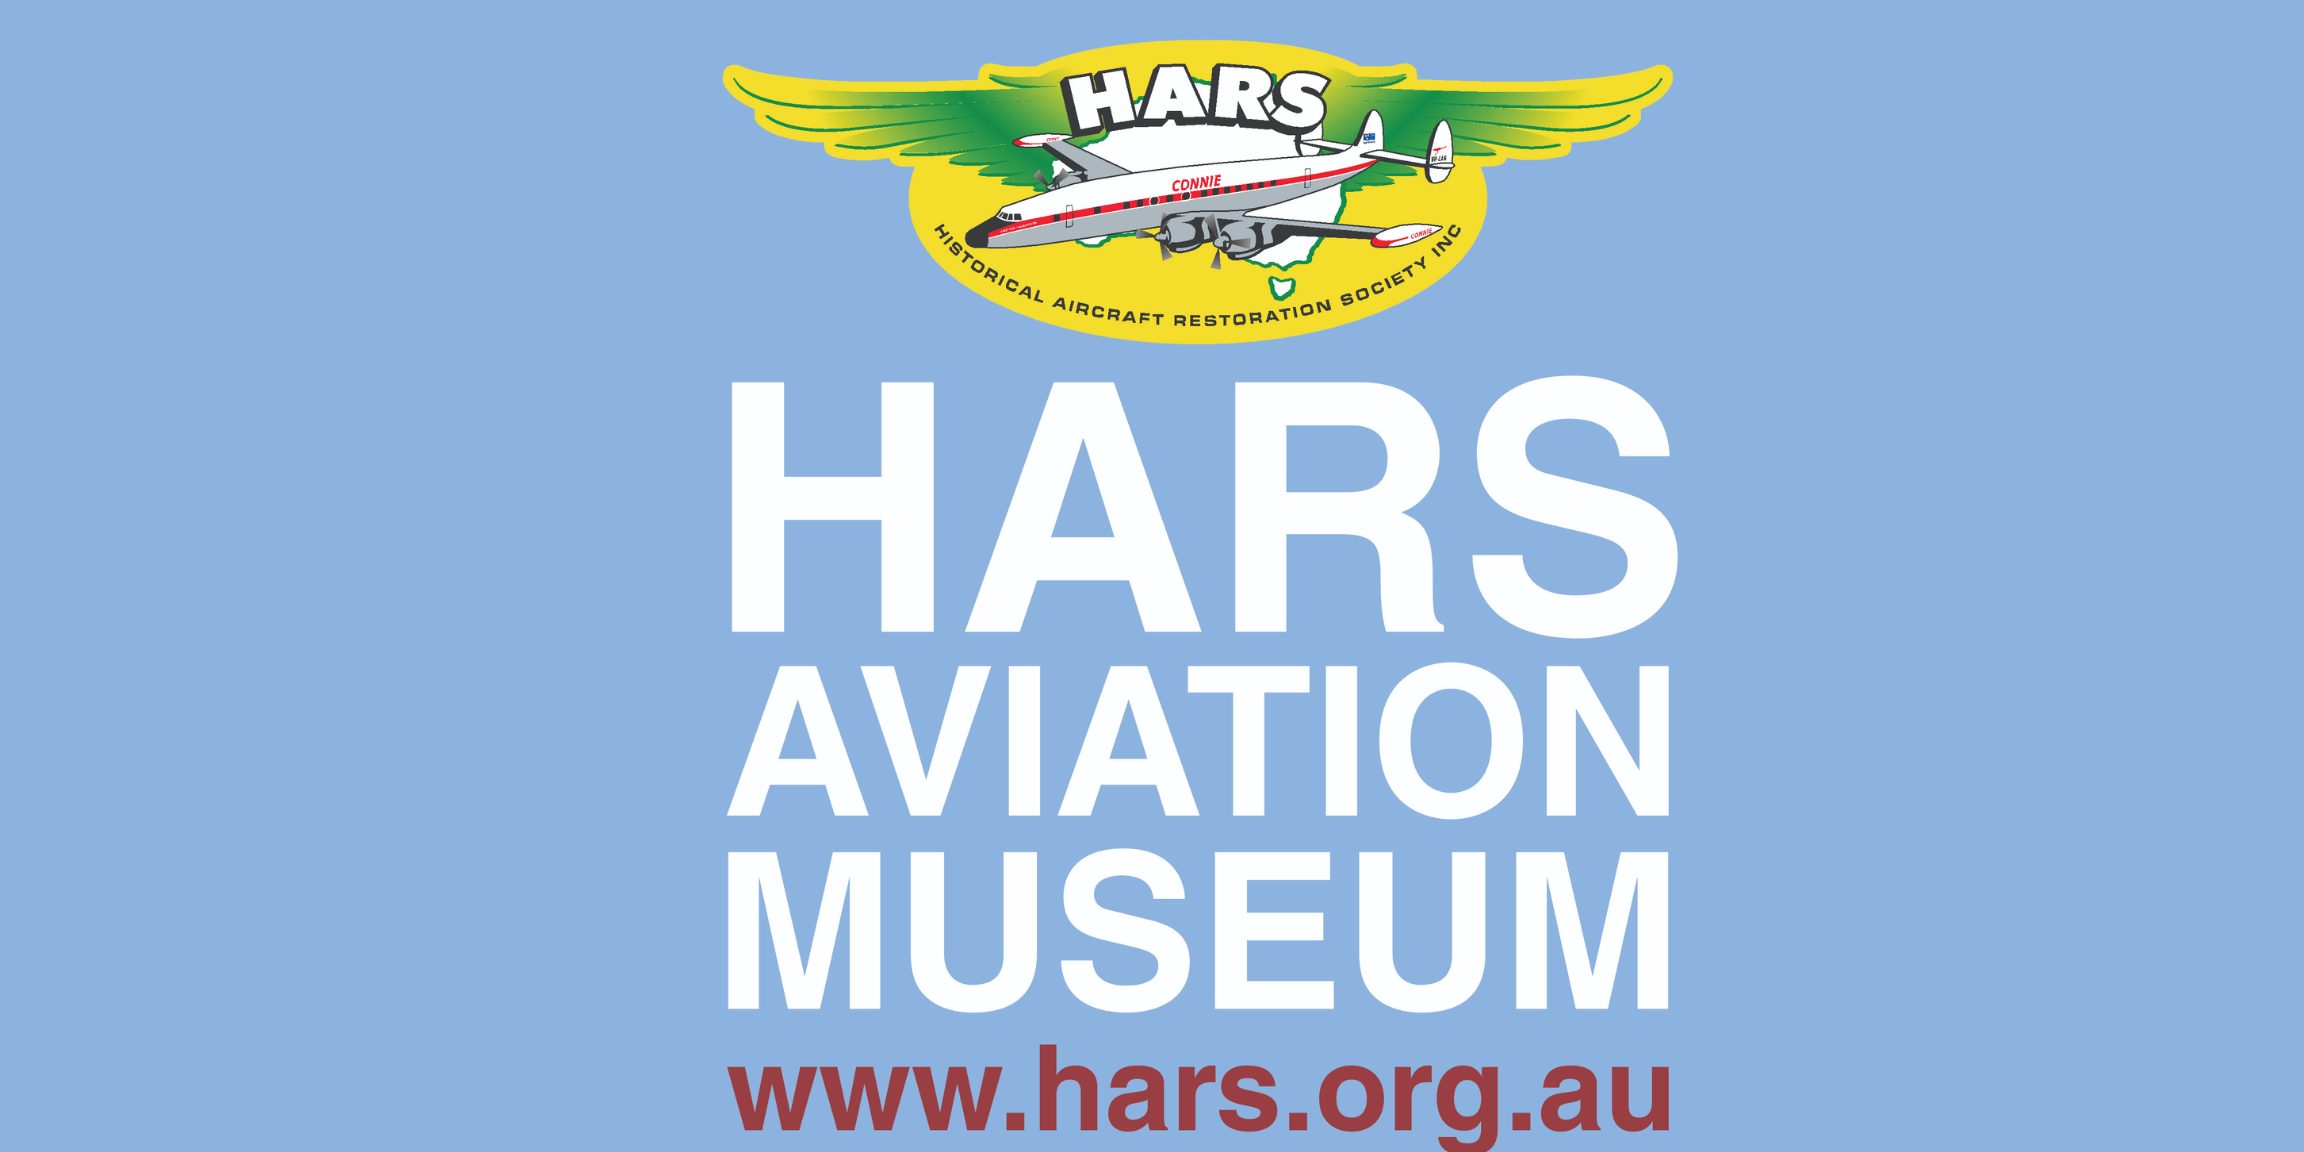 HARS Aviation Museum